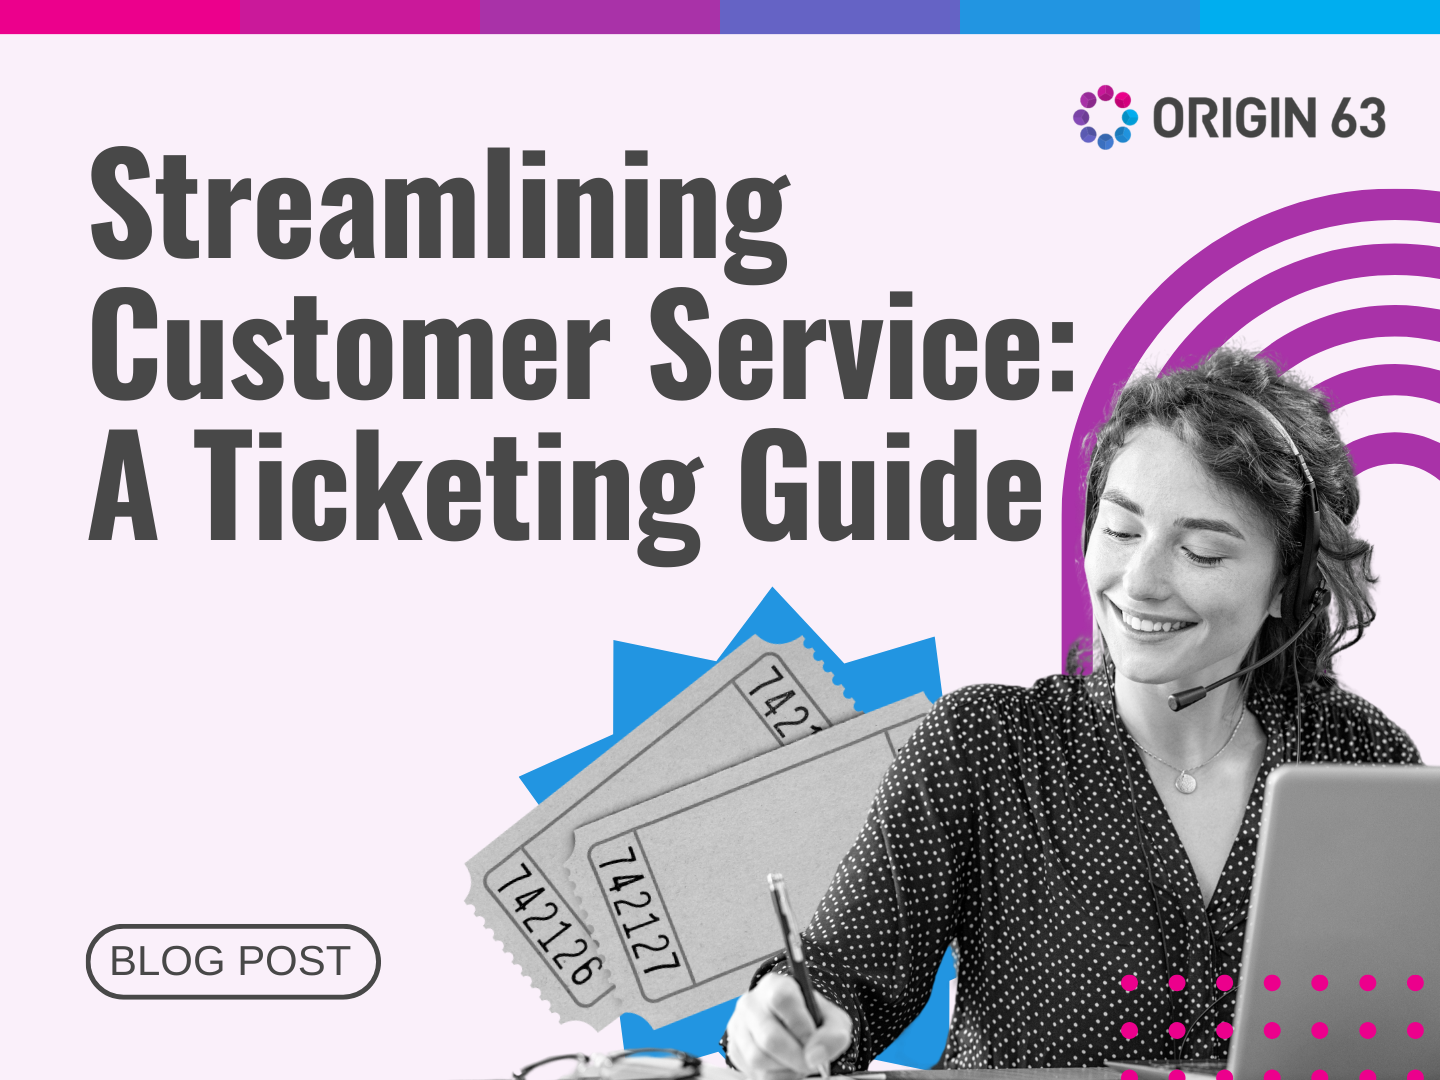 Streamlining Customer Service: A Ticketing Guide